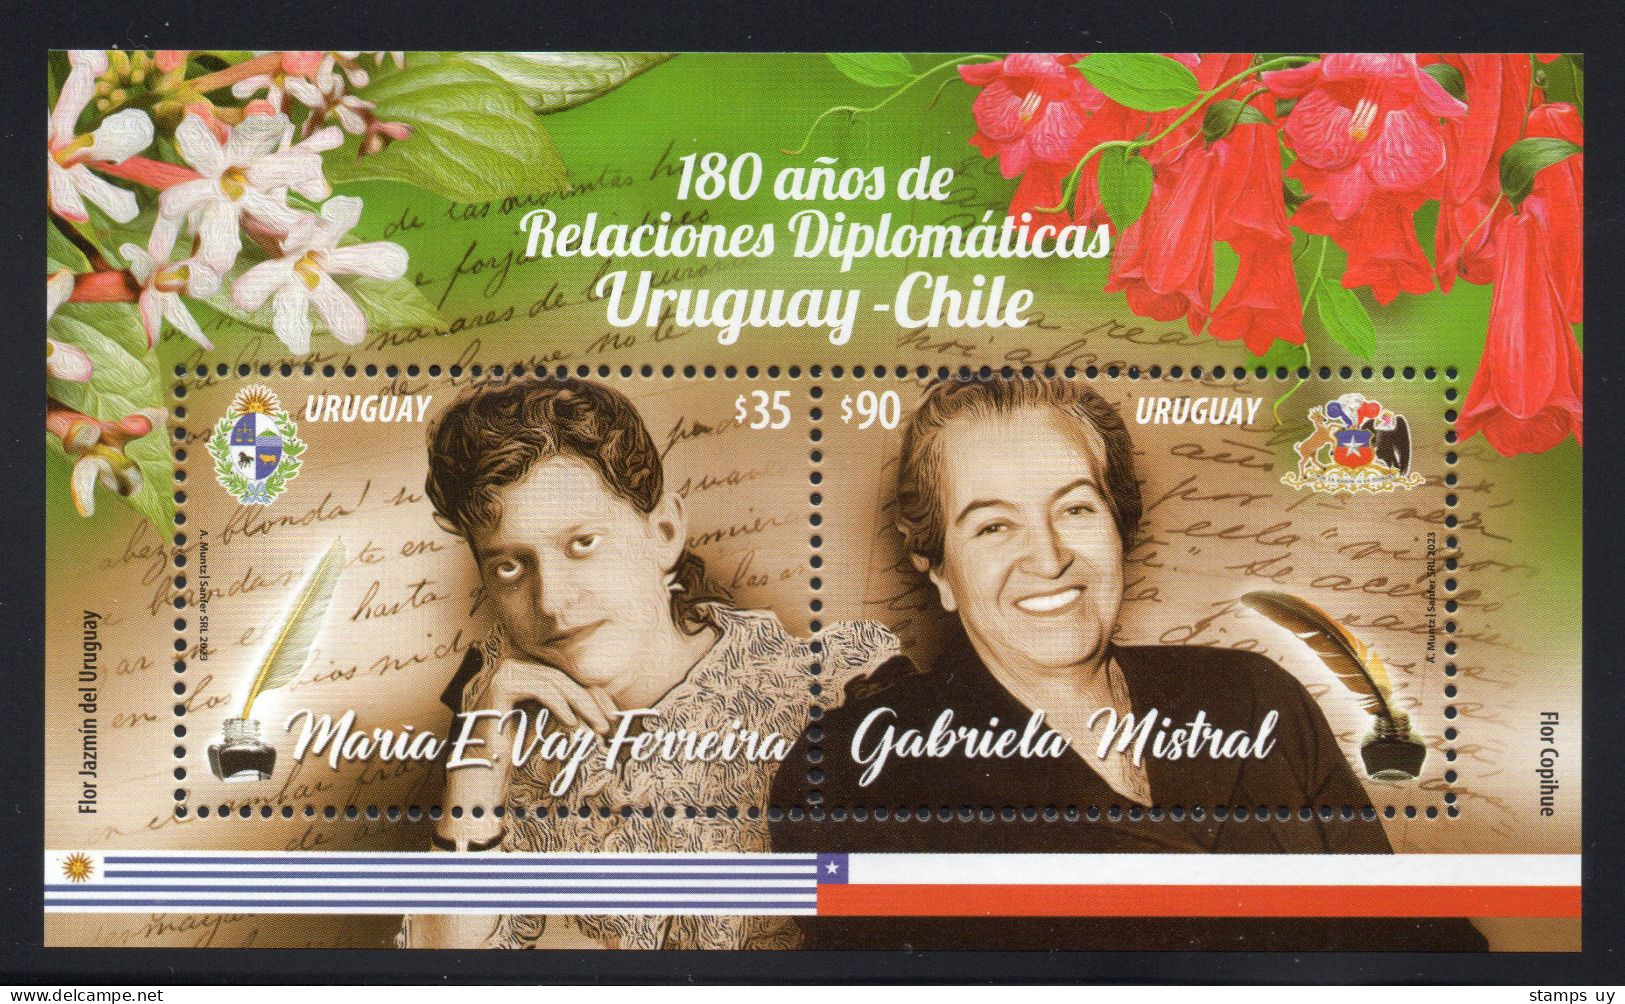 URUGUAY 2023 (Diplomacy, Chile, Poets, M E Vaz Ferreira, Gabriela Mistral, Nobel Prize, Literature, Flowers) - 1 Block - Francobolli